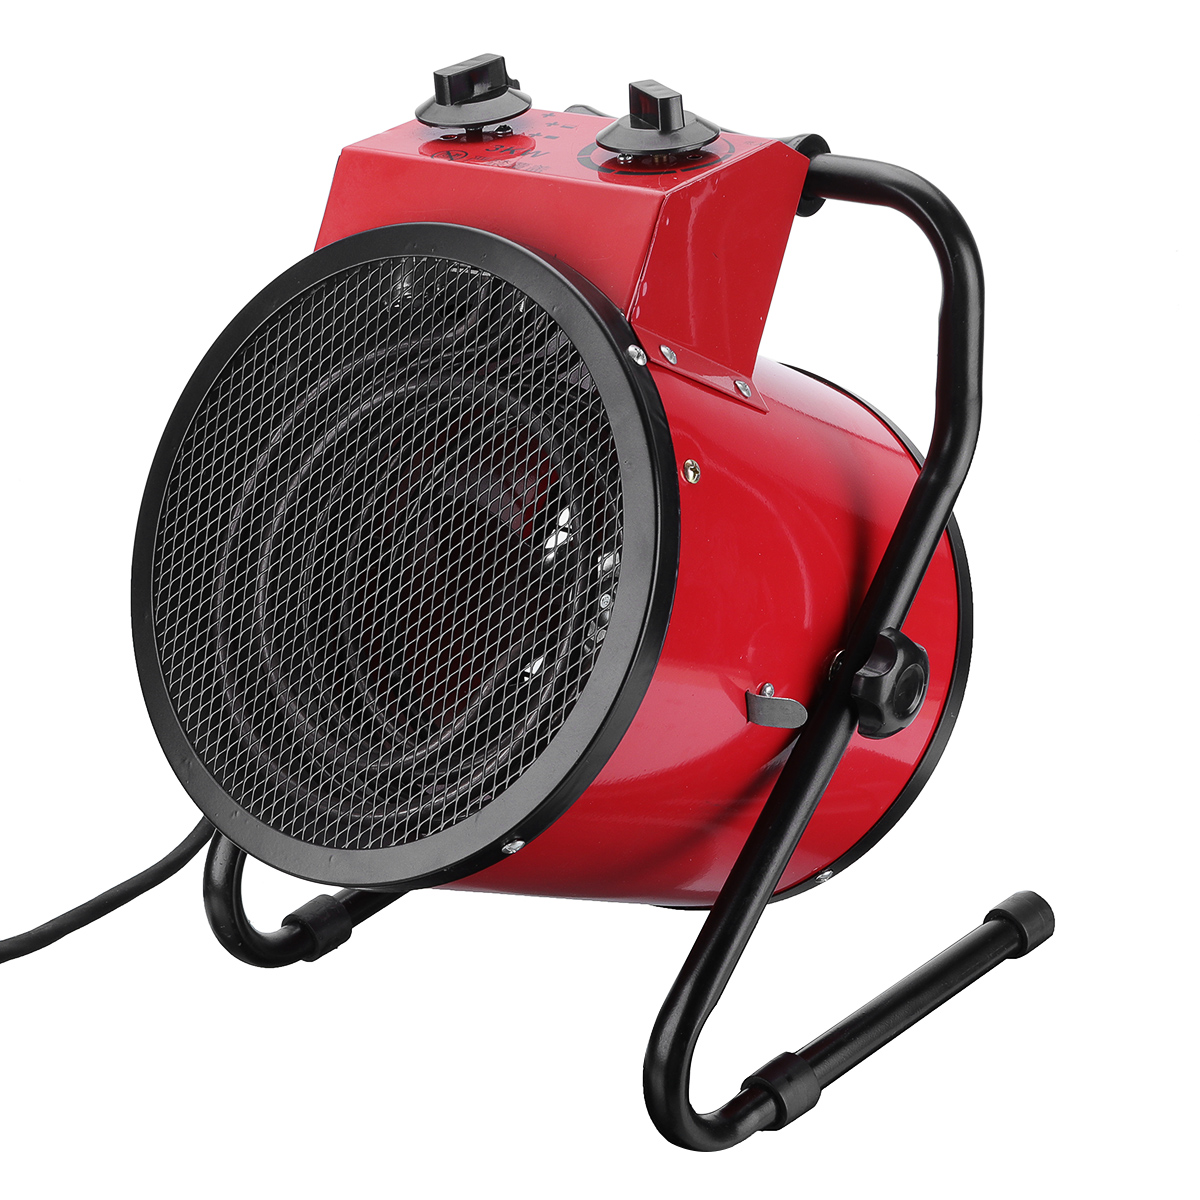 

3KW 220V Portable Electric Warm Fan Heater Industrial Space Workshop Garage